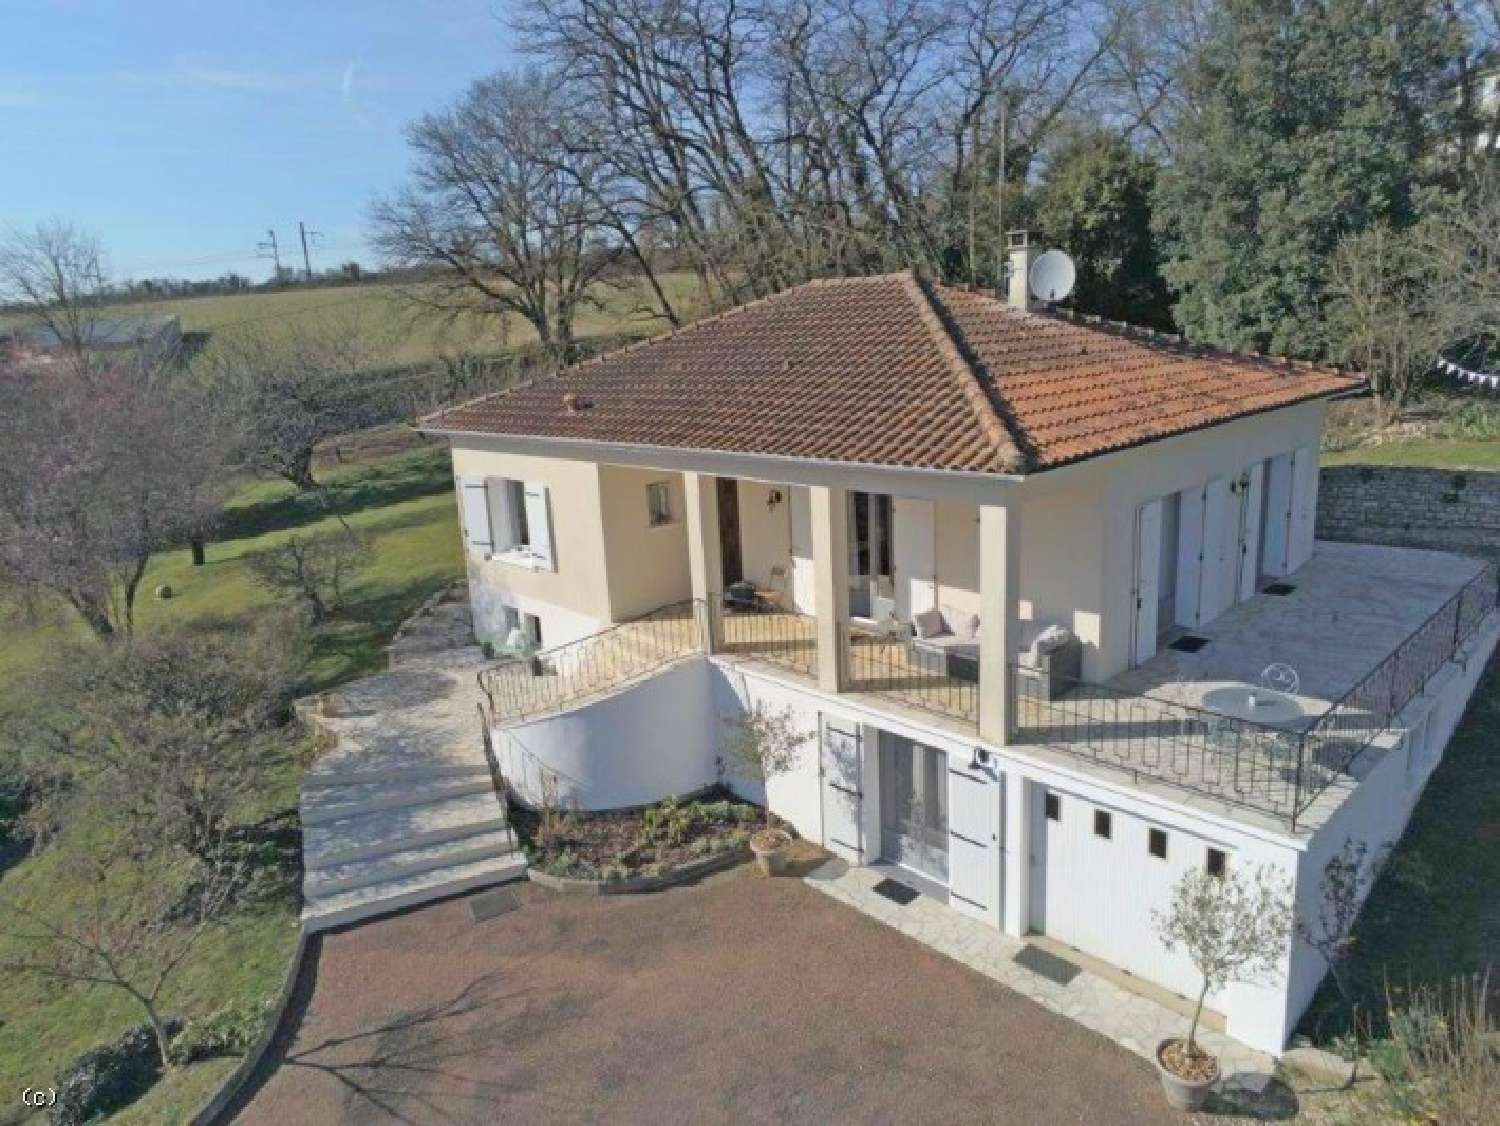  à vendre maison Ruffec Charente 2